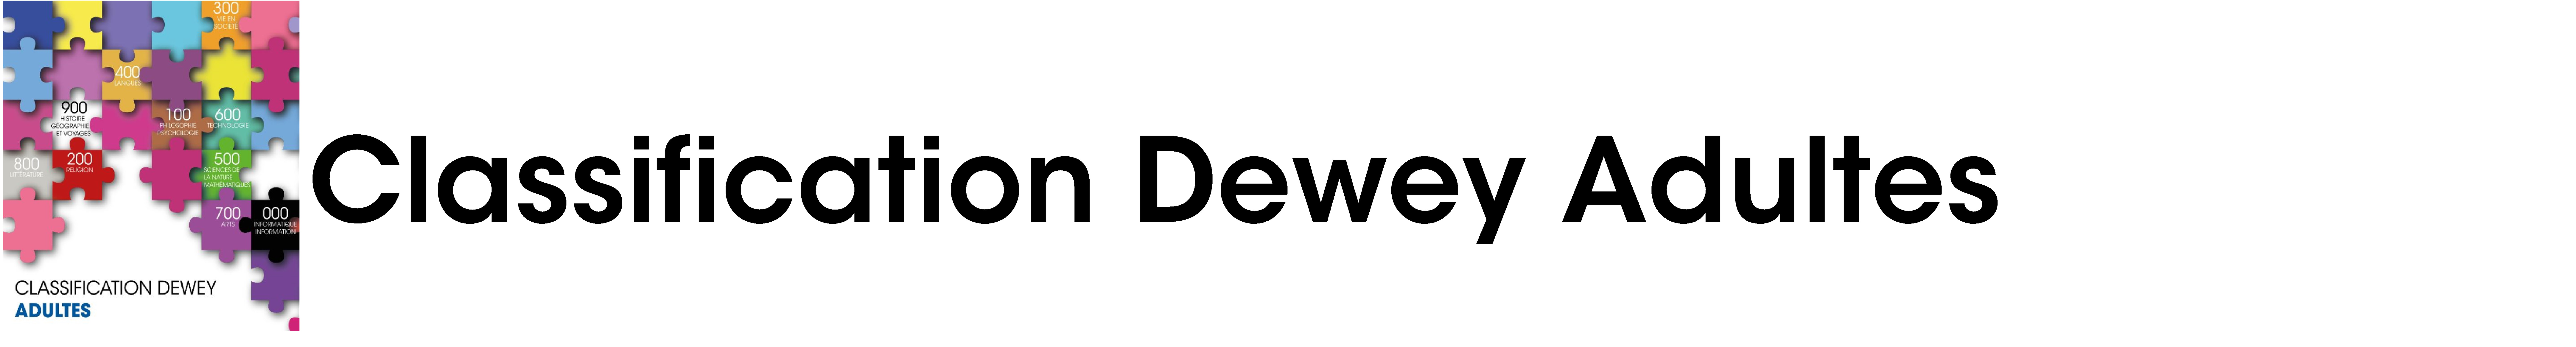 Classification Dewey Adultes_new.jpg